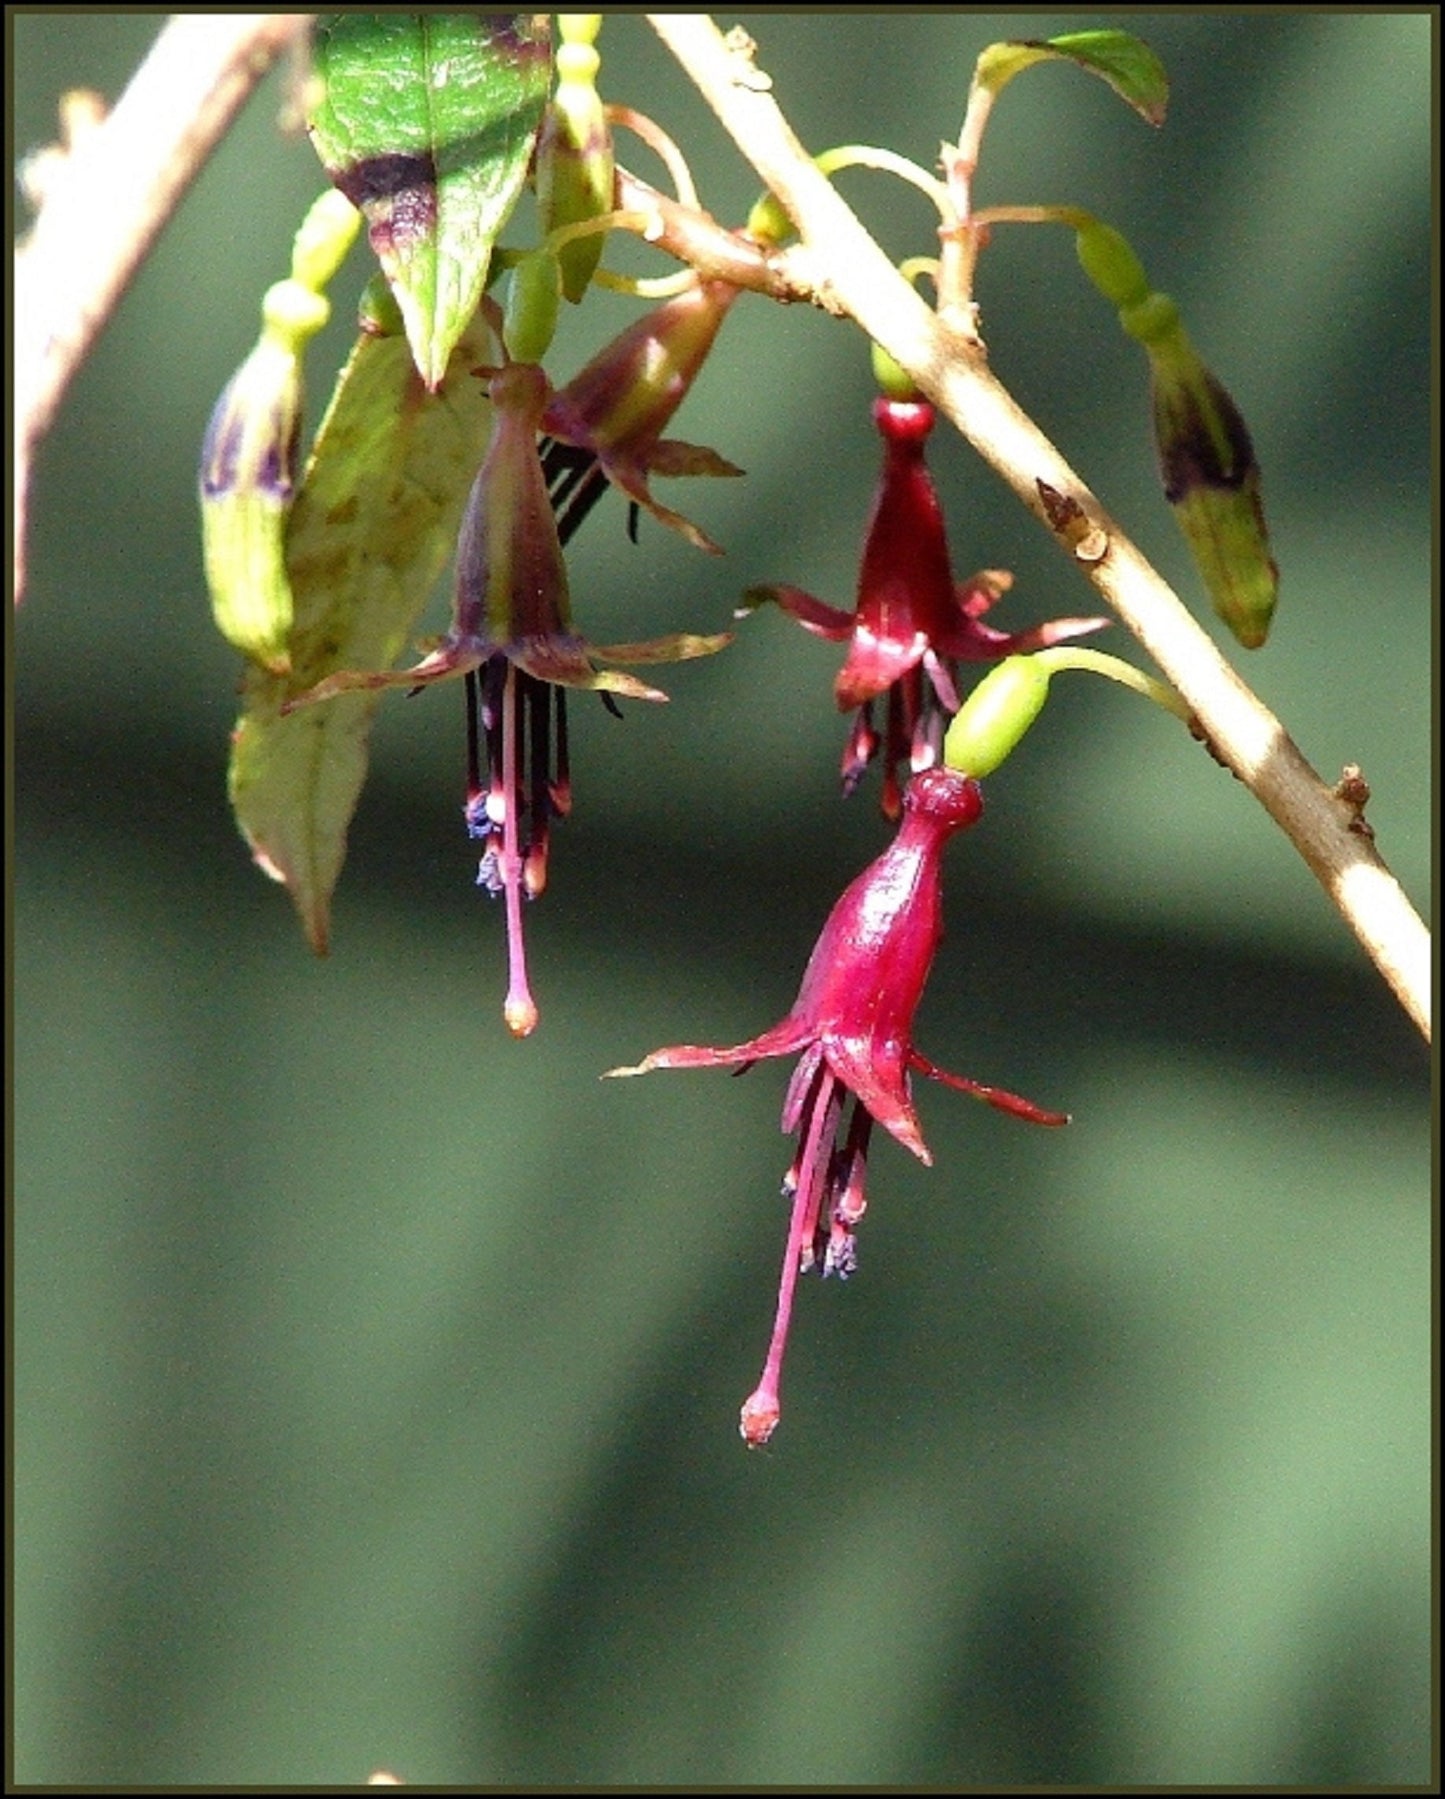 Fuchsia Excorticata * Árvore Fuchsia * Maior Fuchsia do Mundo * Raro * 5 Sementes *